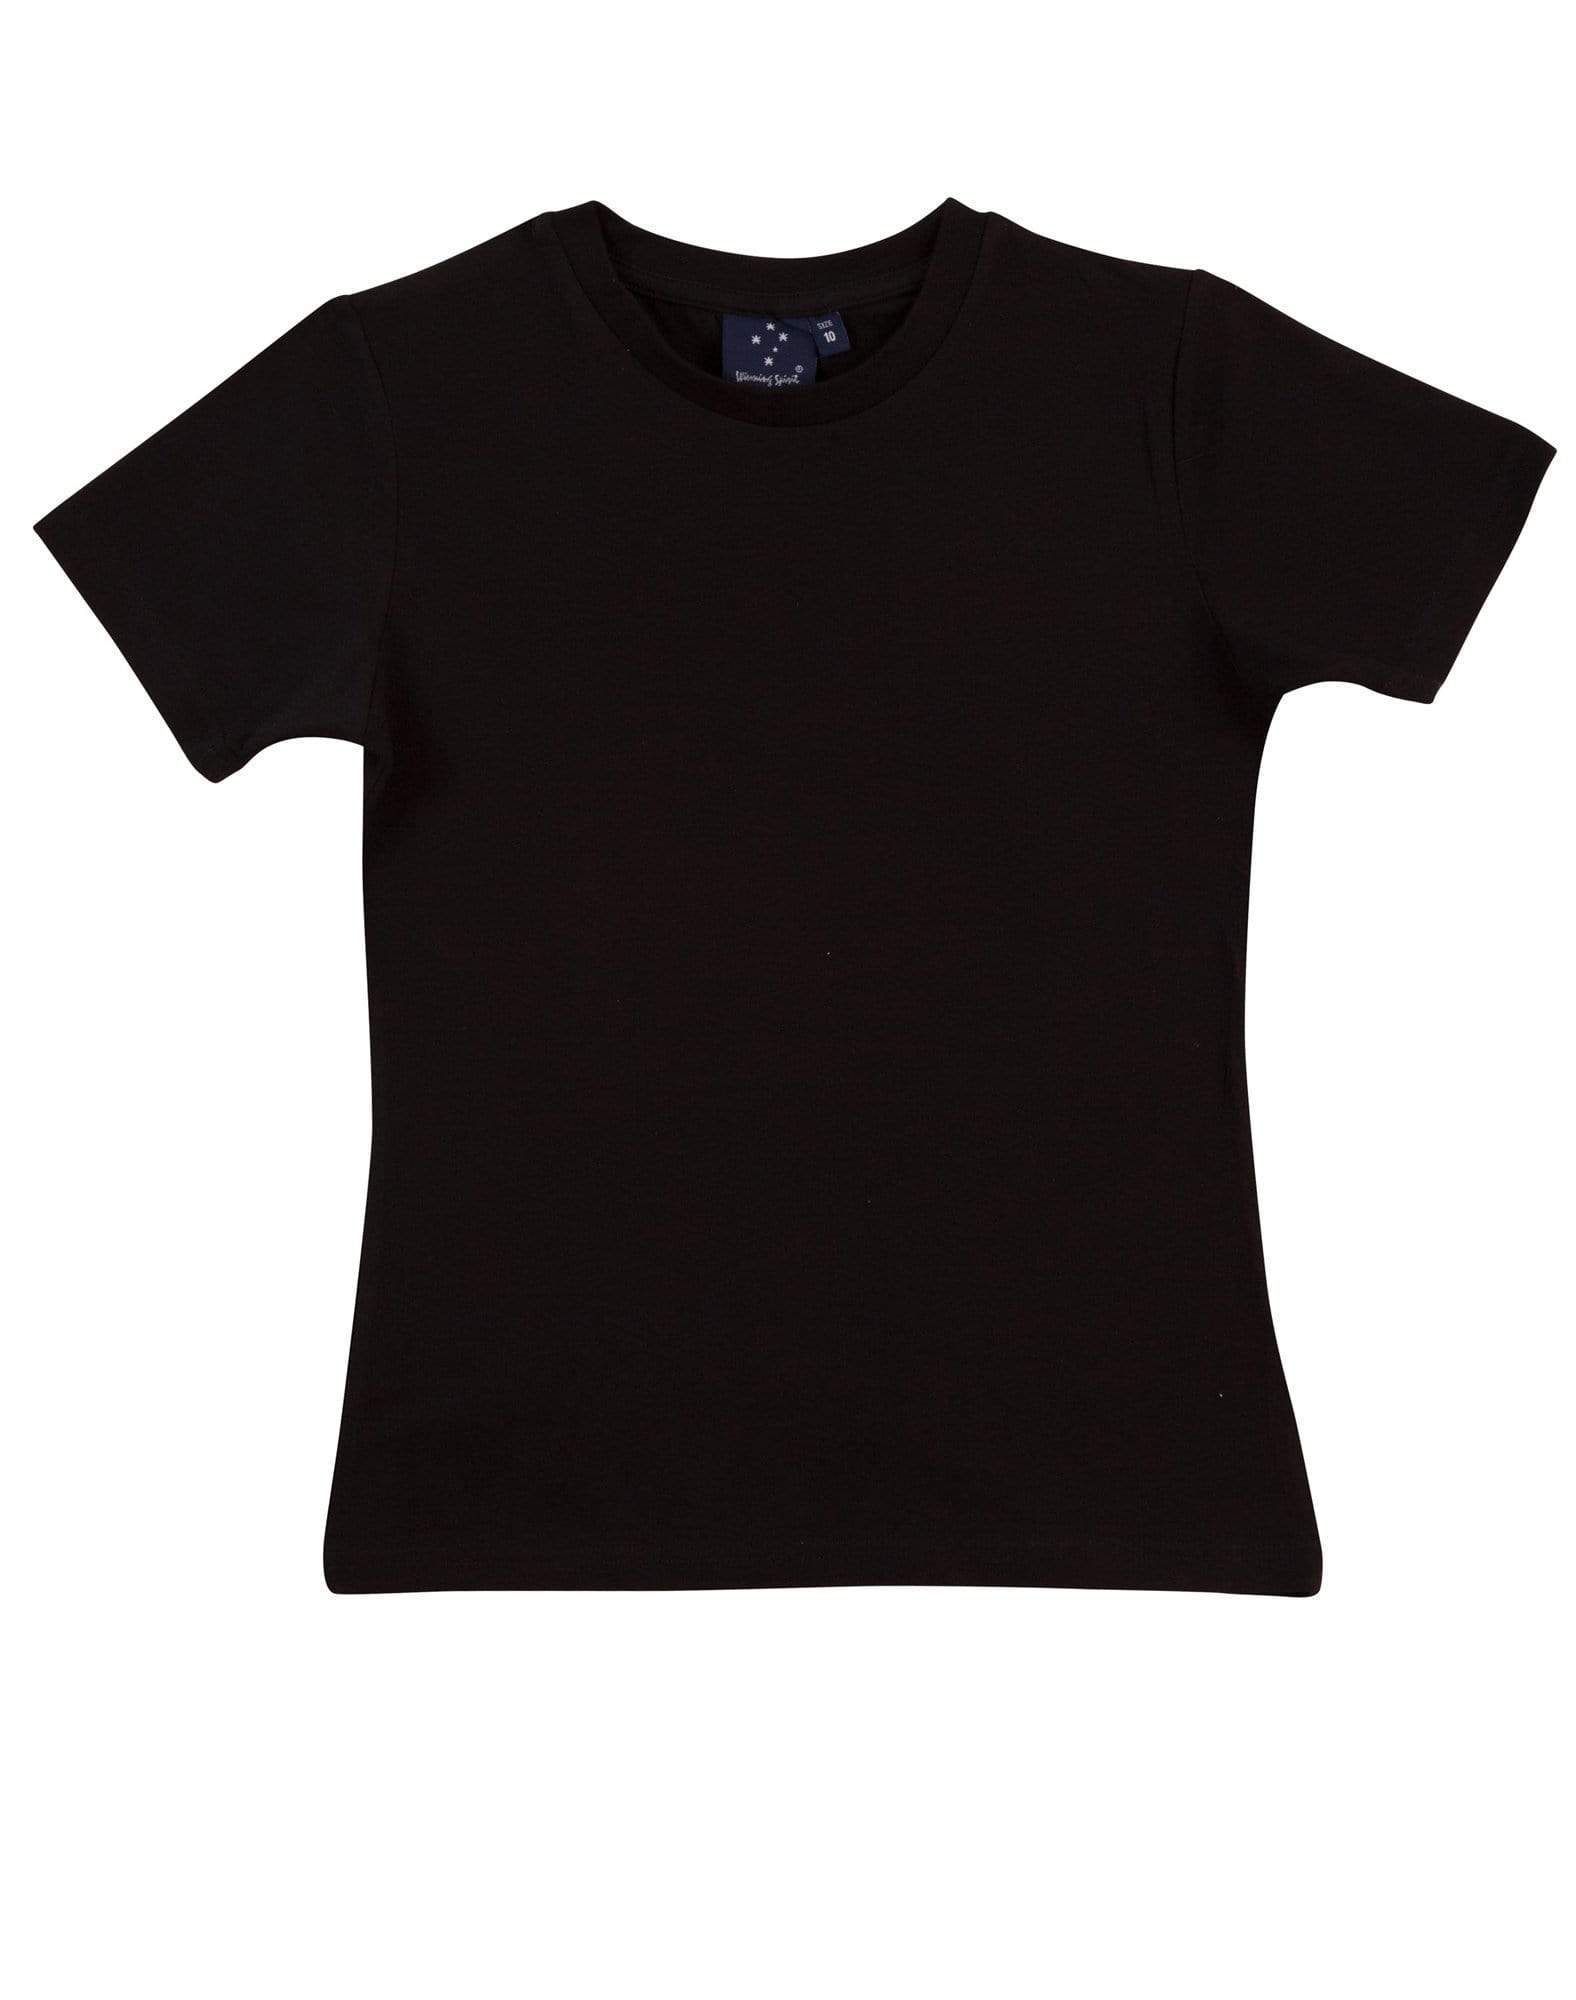 Superfit Tee Shirt Ladies' Ts15 Casual Wear Winning Spirit Black 8 